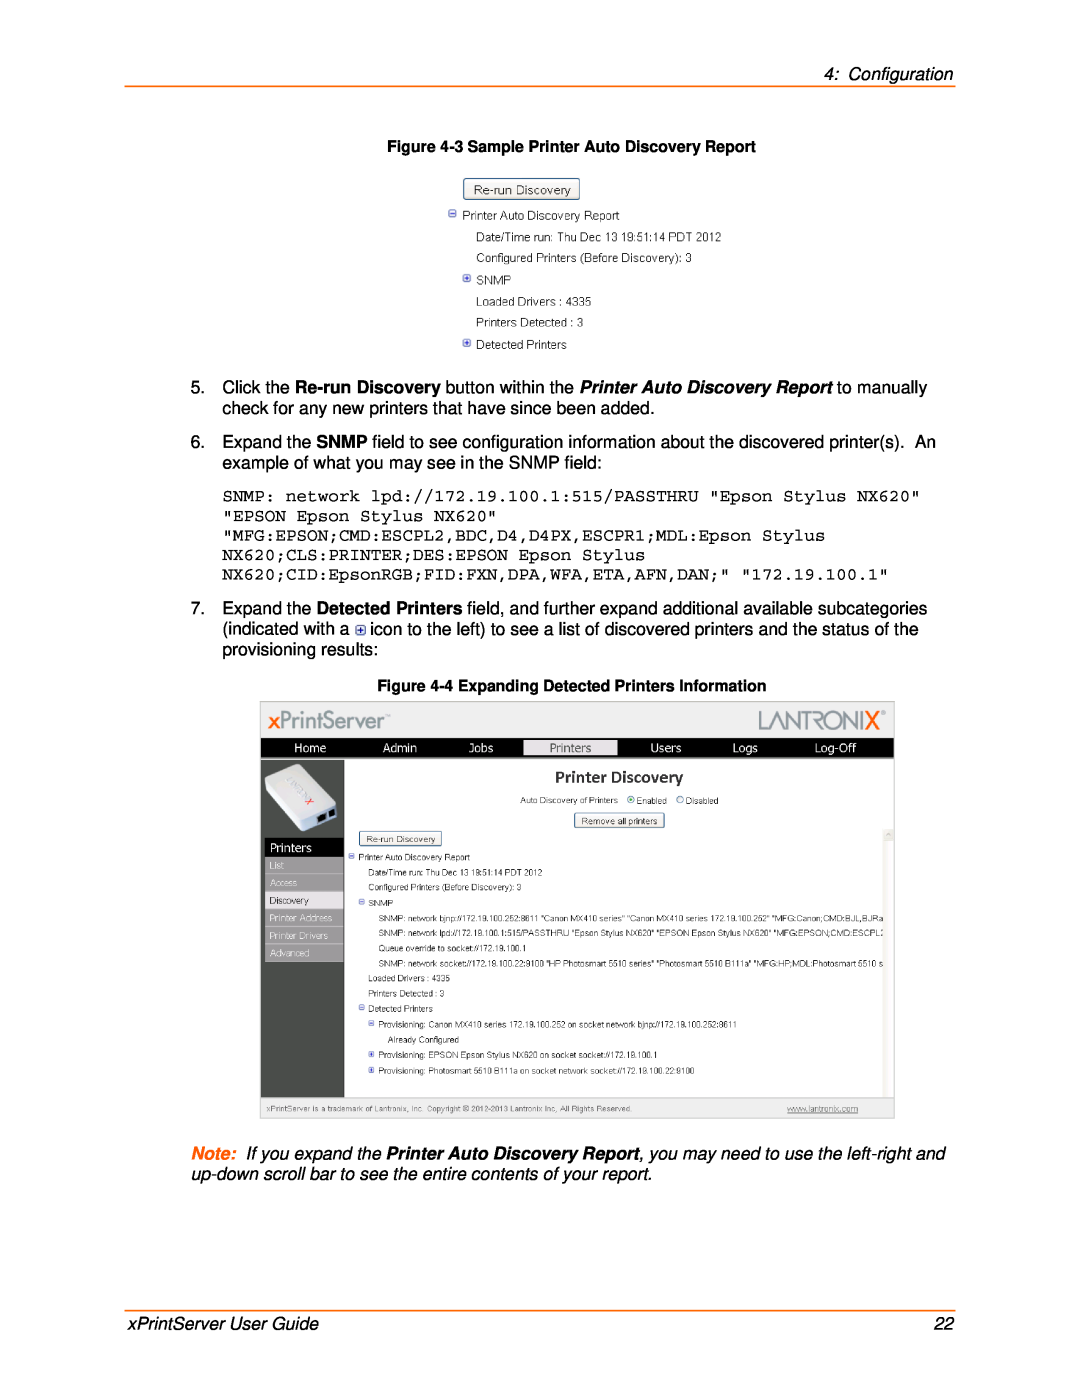 Lantronix 900-603 manual Configuration, xPrintServer User Guide, 3 Sample Printer Auto Discovery Report 